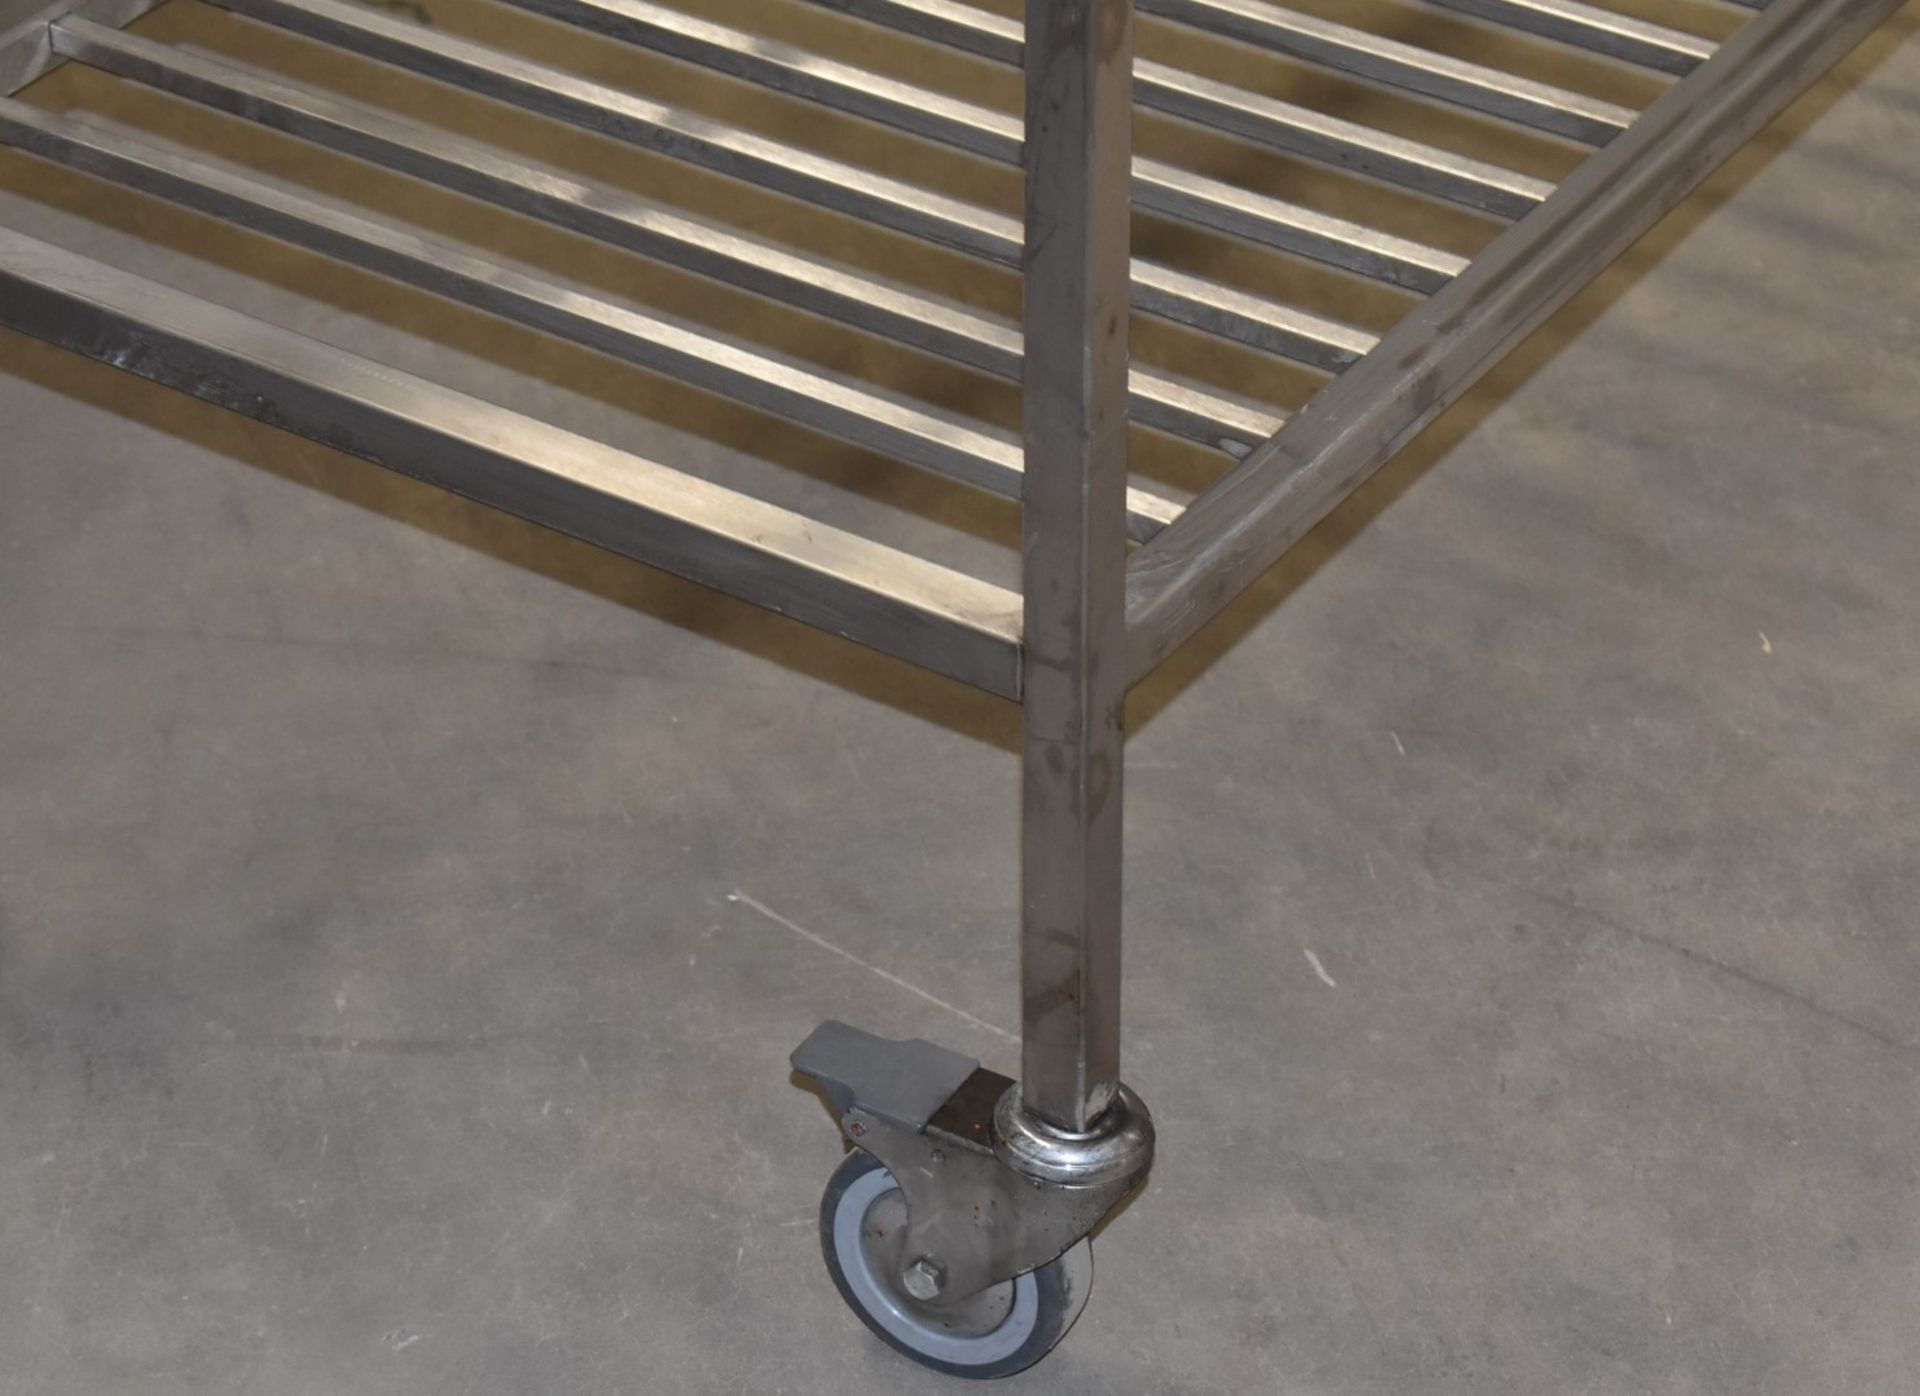 1 x Grundy Stainless Steel Mobile Veg Shelf Unit - Unused - Size H88 x W120 x D60 cms - Ref - Image 7 of 10